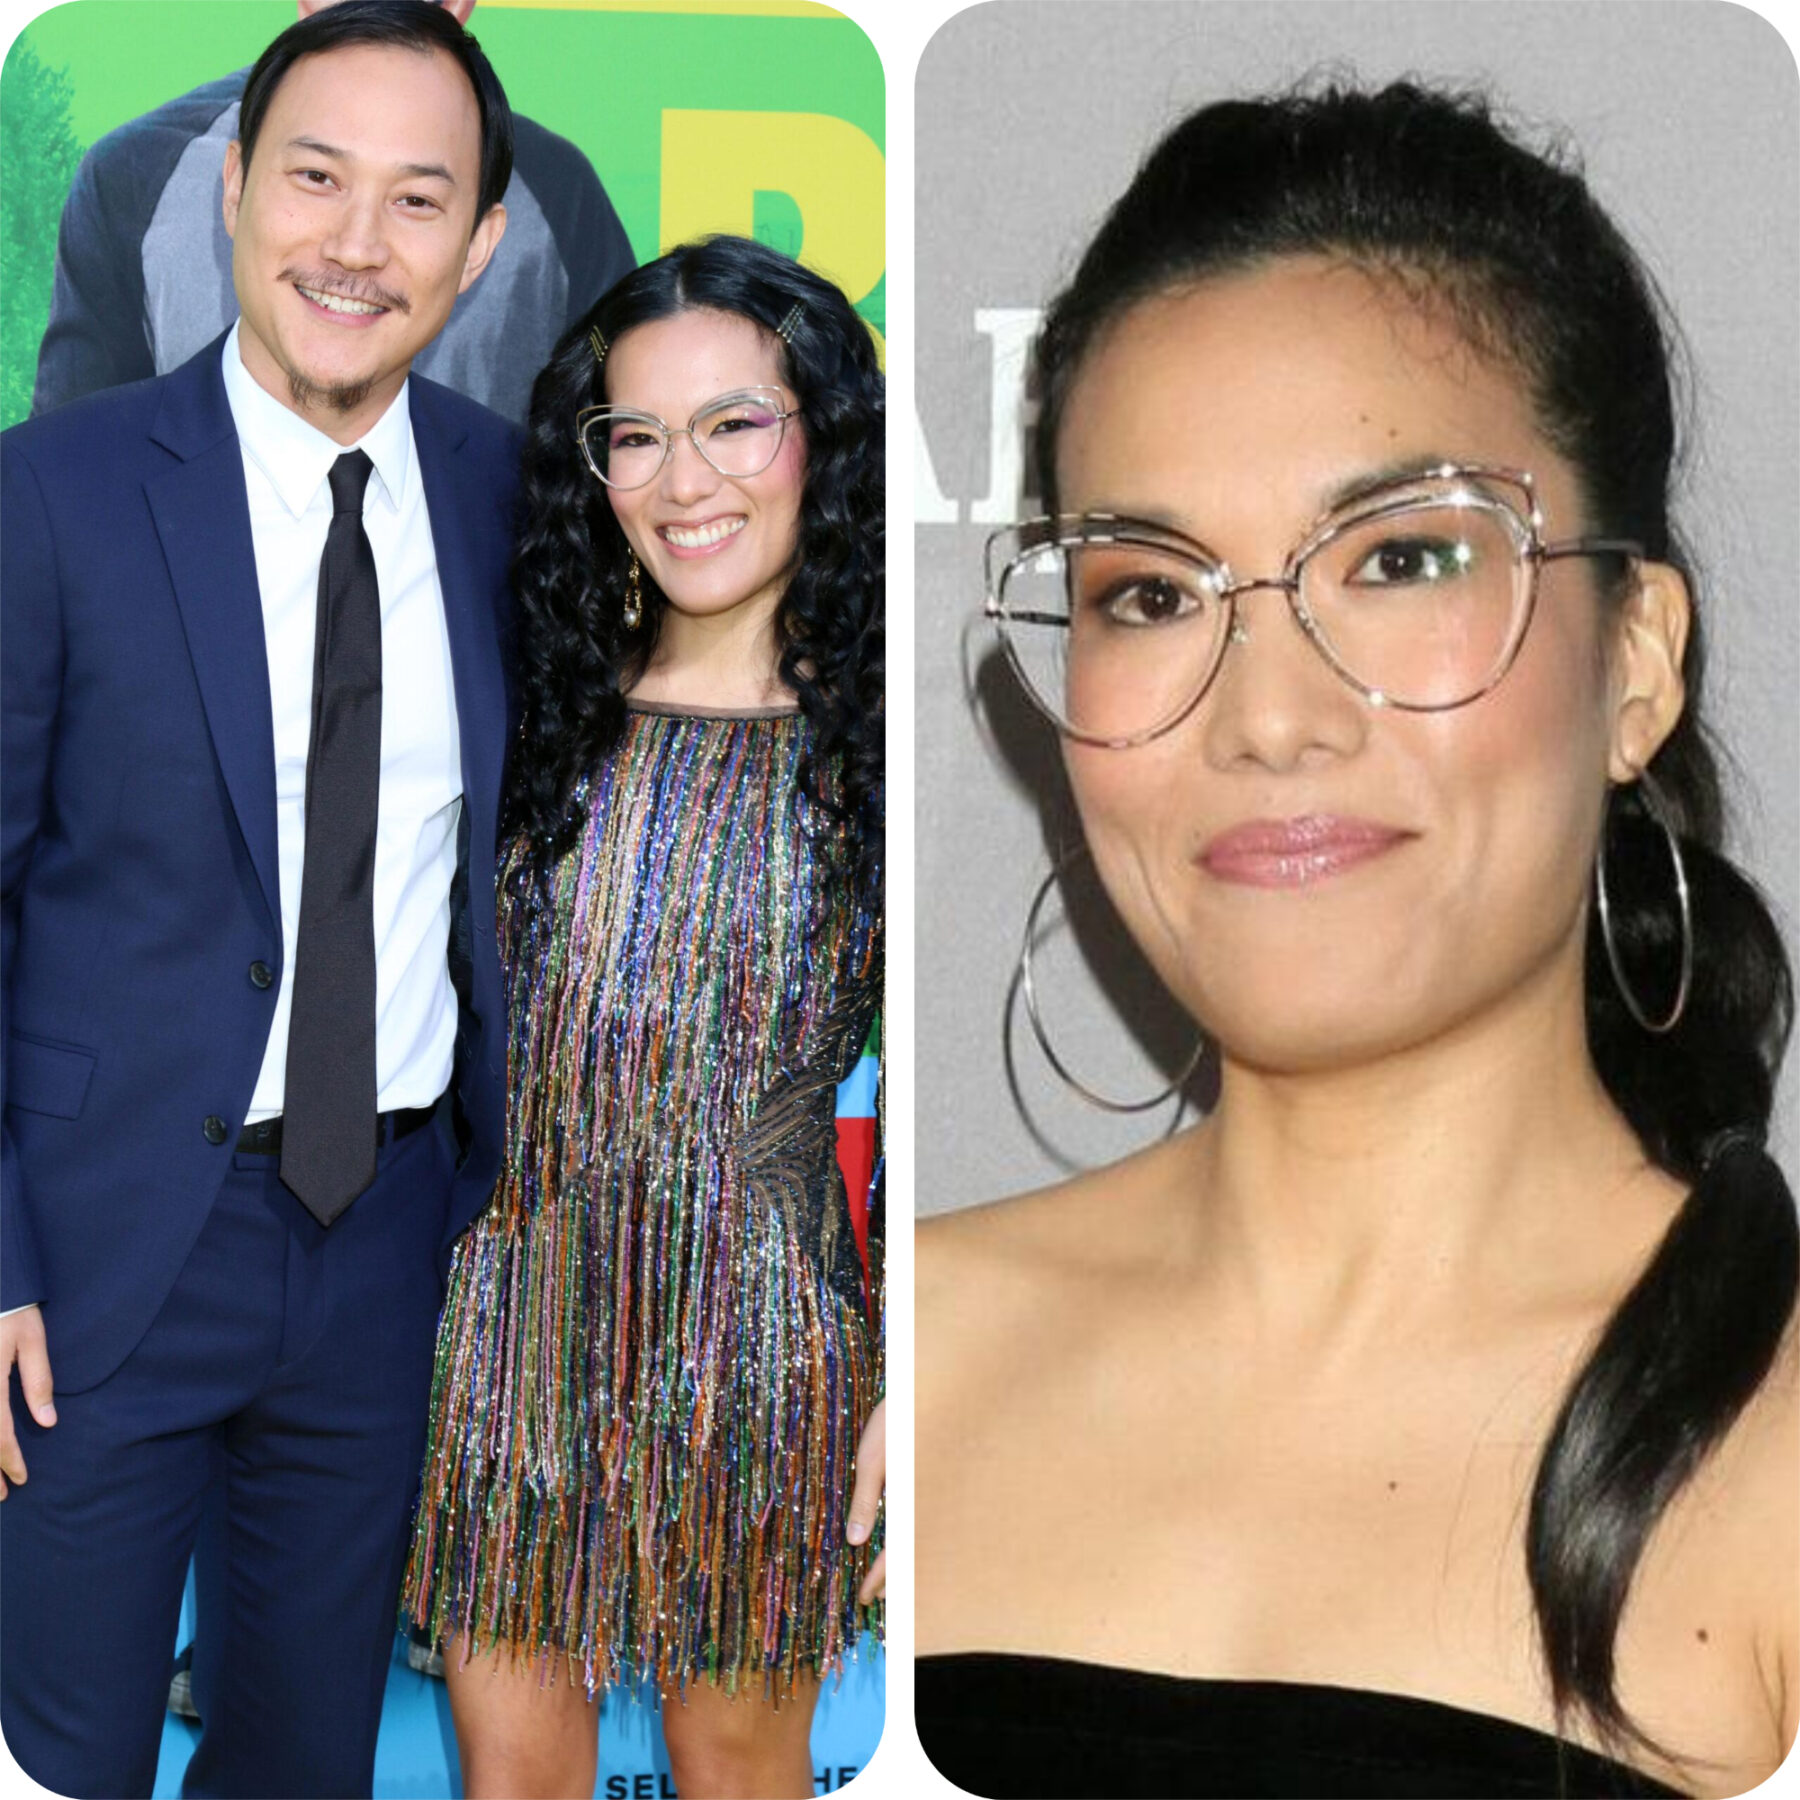 Comedian and actress Ali Wong‘s husband, Justin Hakuta, has filed his response in their divorce